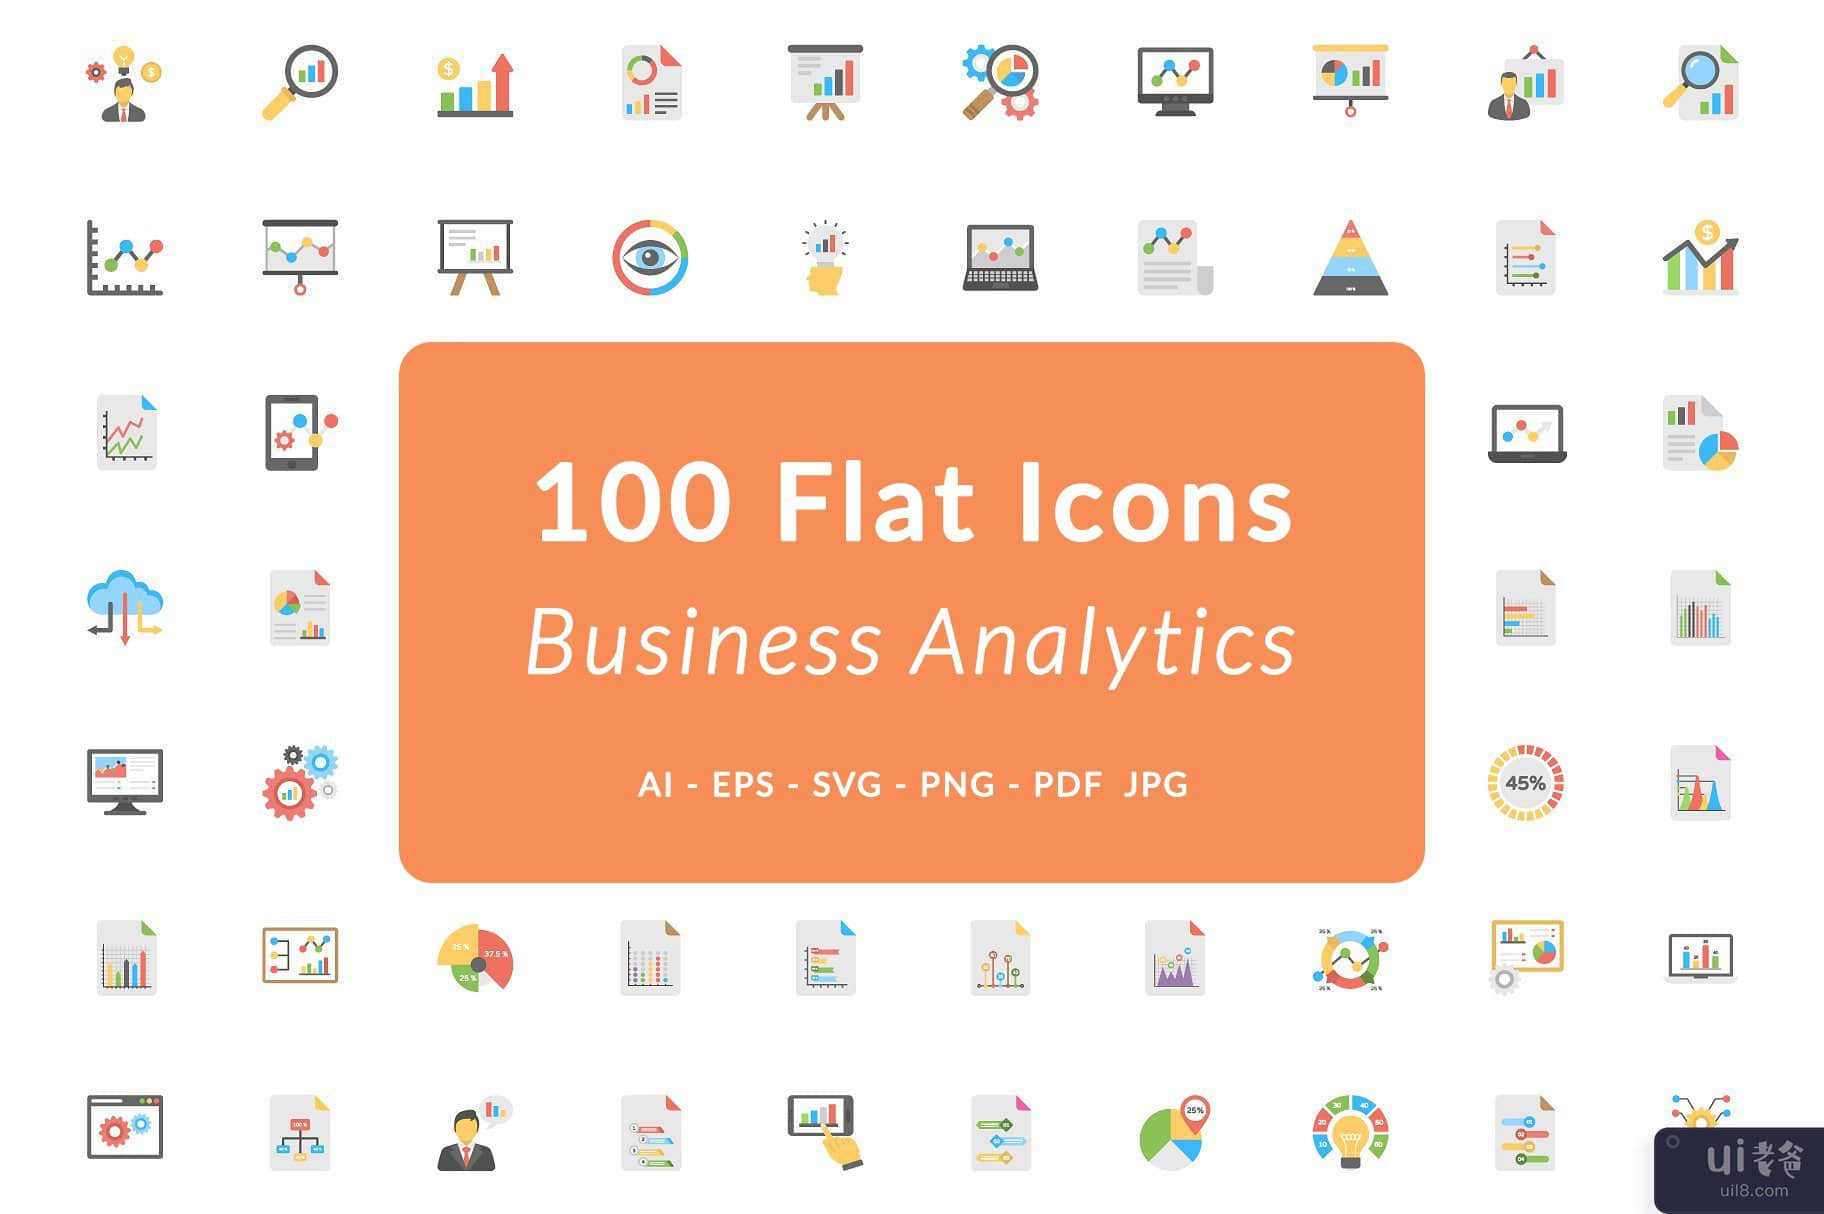 用于业务分析的 100 个平面图标(100 Flat Icons for Business Analytics)插图